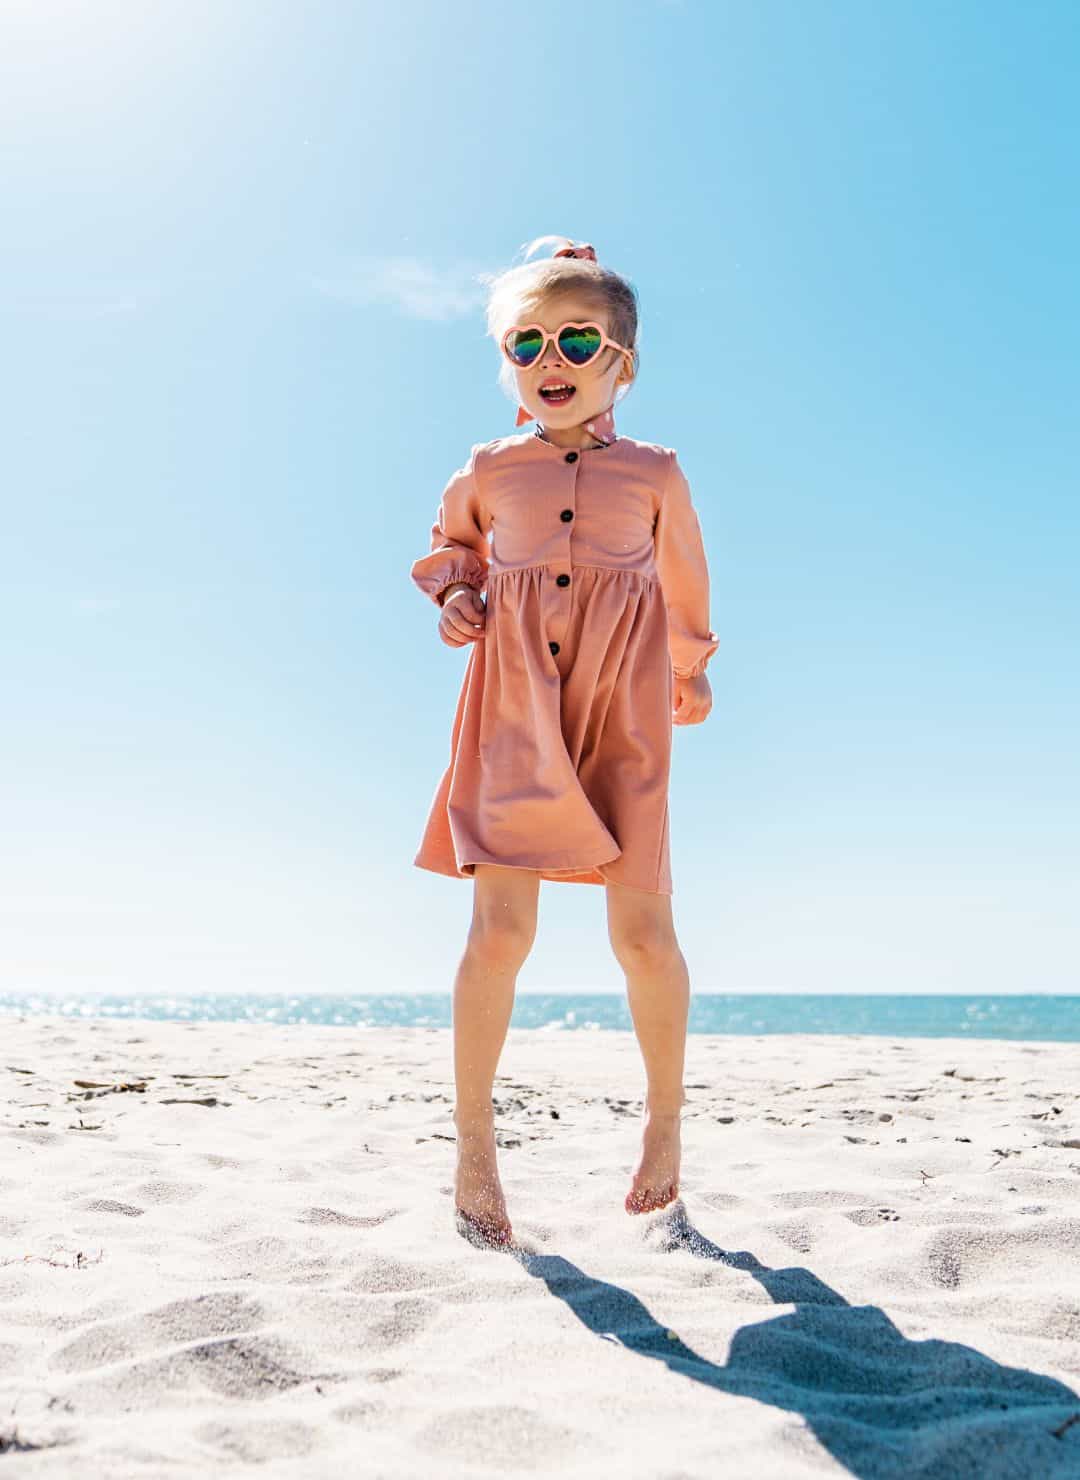 Kind trägt CANDY Schmuck an sonnigen Tag am See